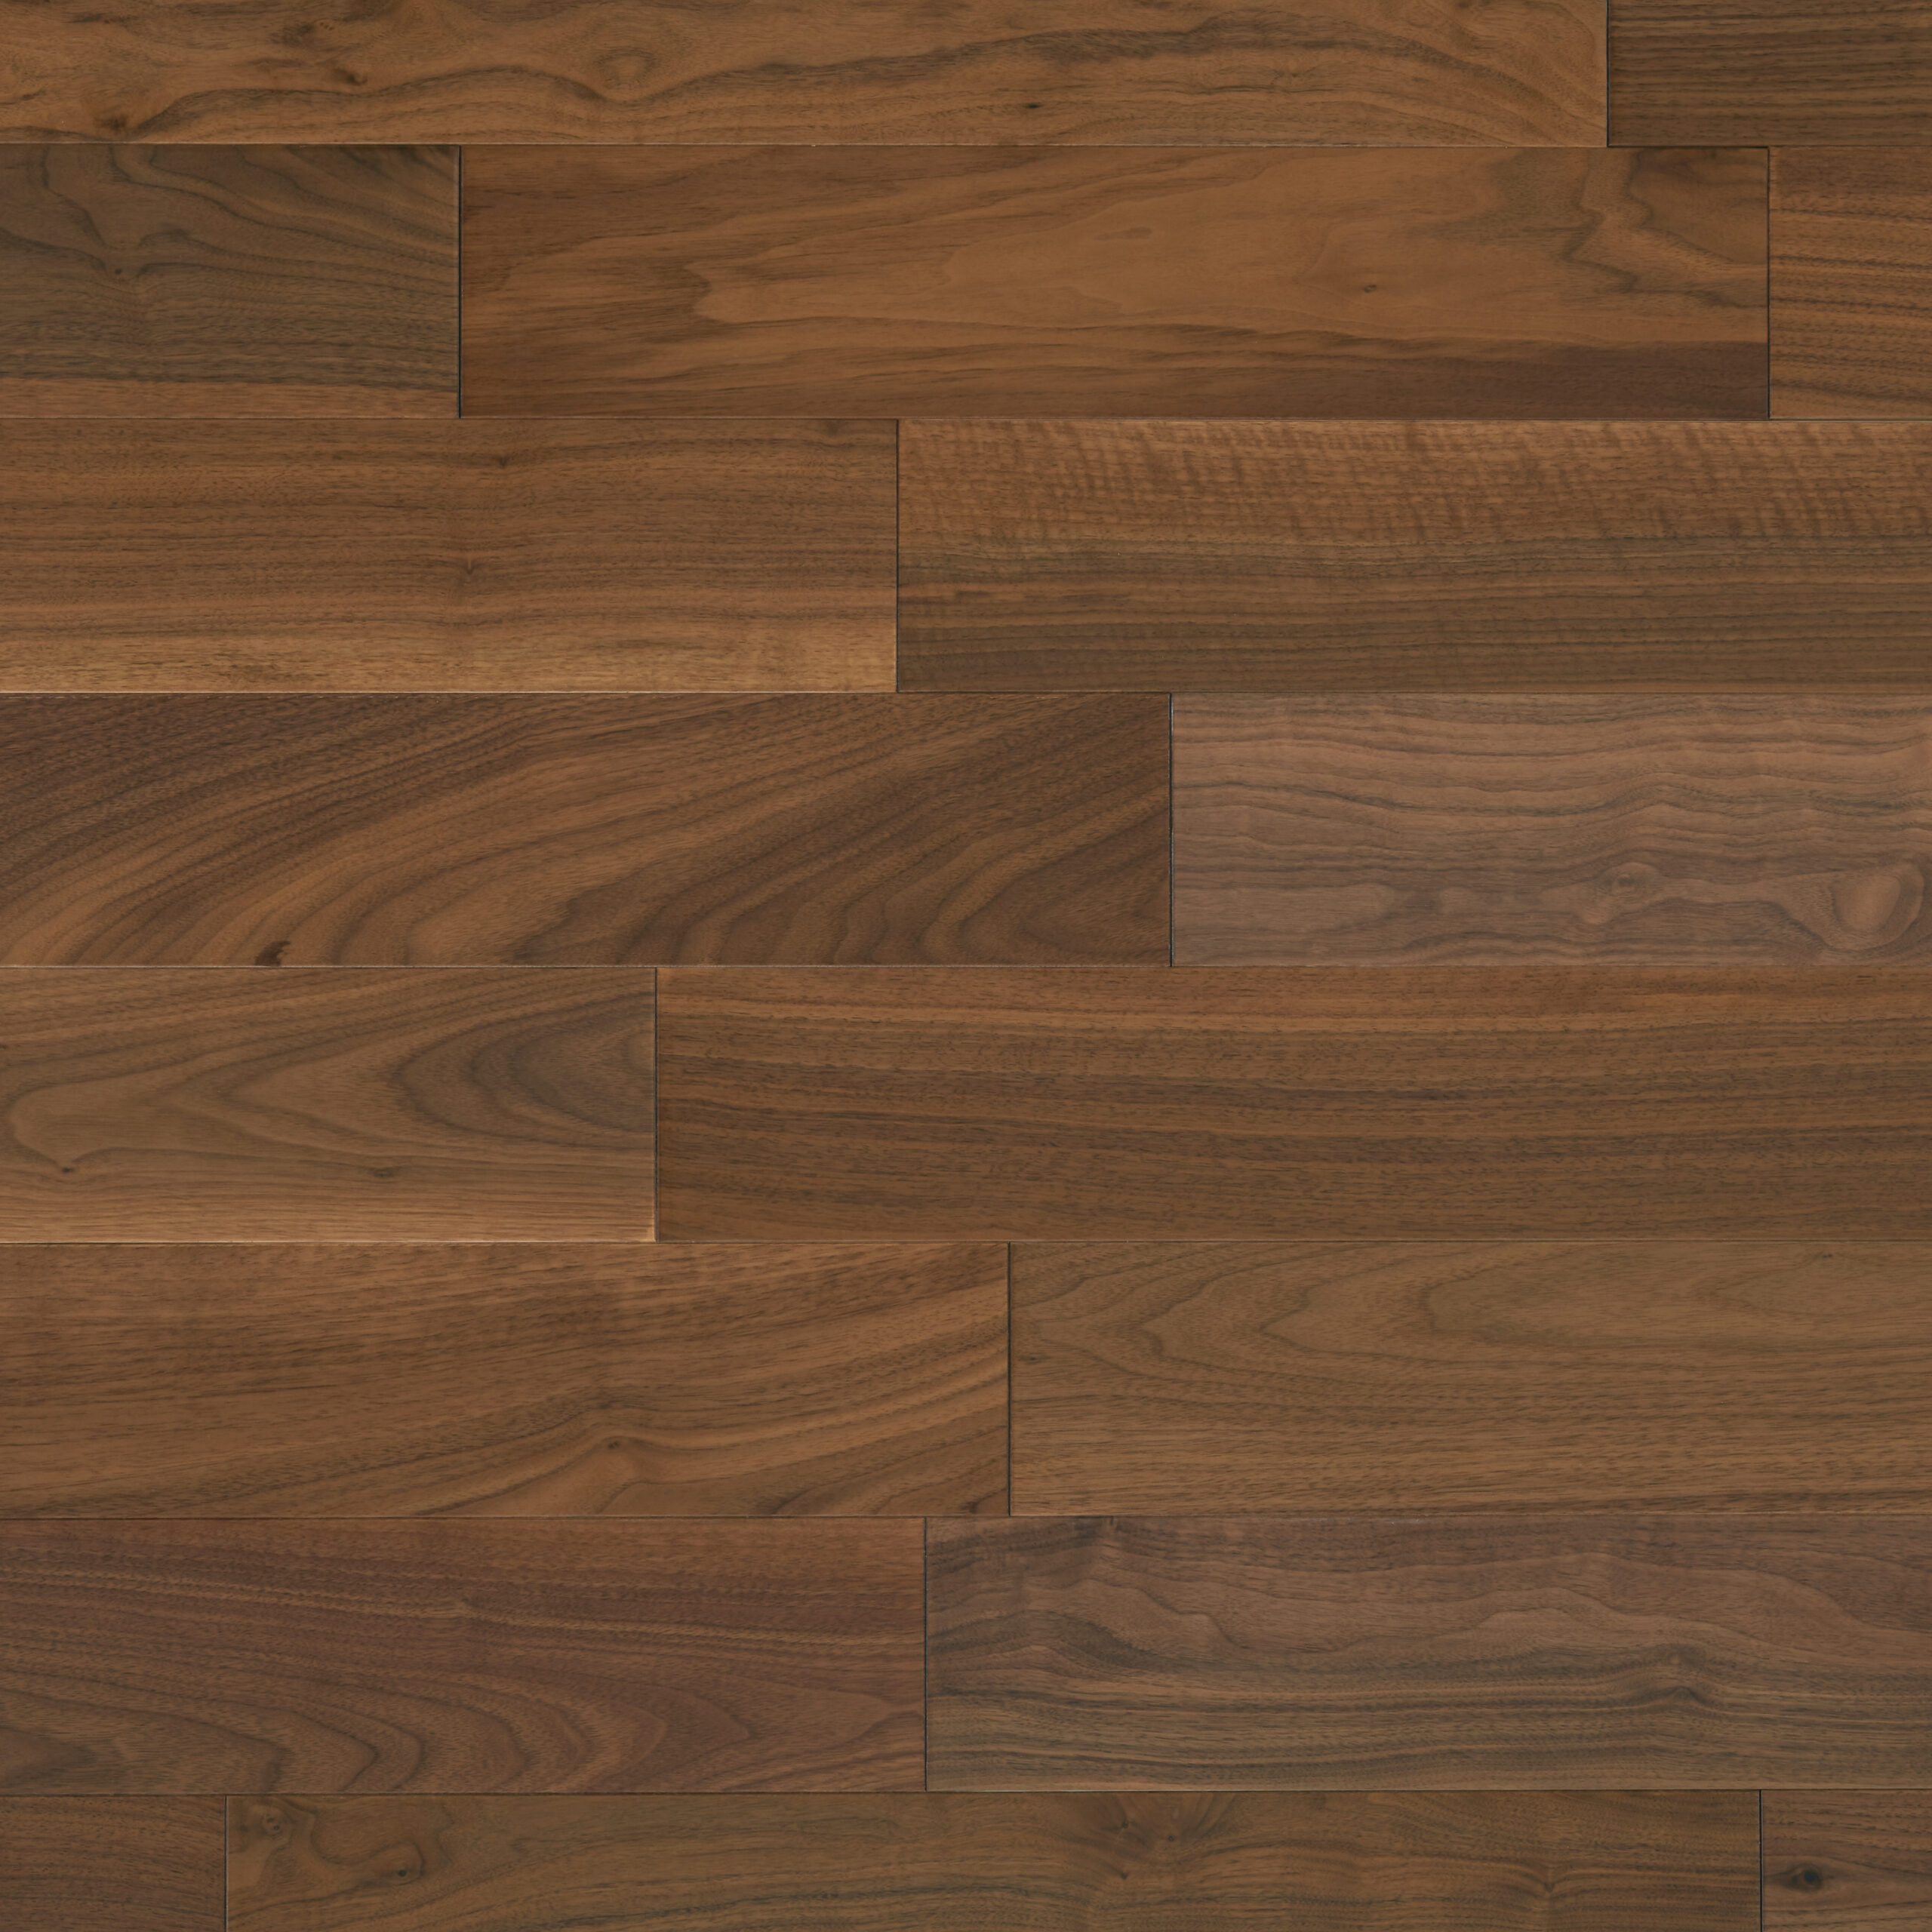 Furlong Flooring: Next Step 125 (6997) – Black American Walnut Lacquered (18/4 x 125mm)